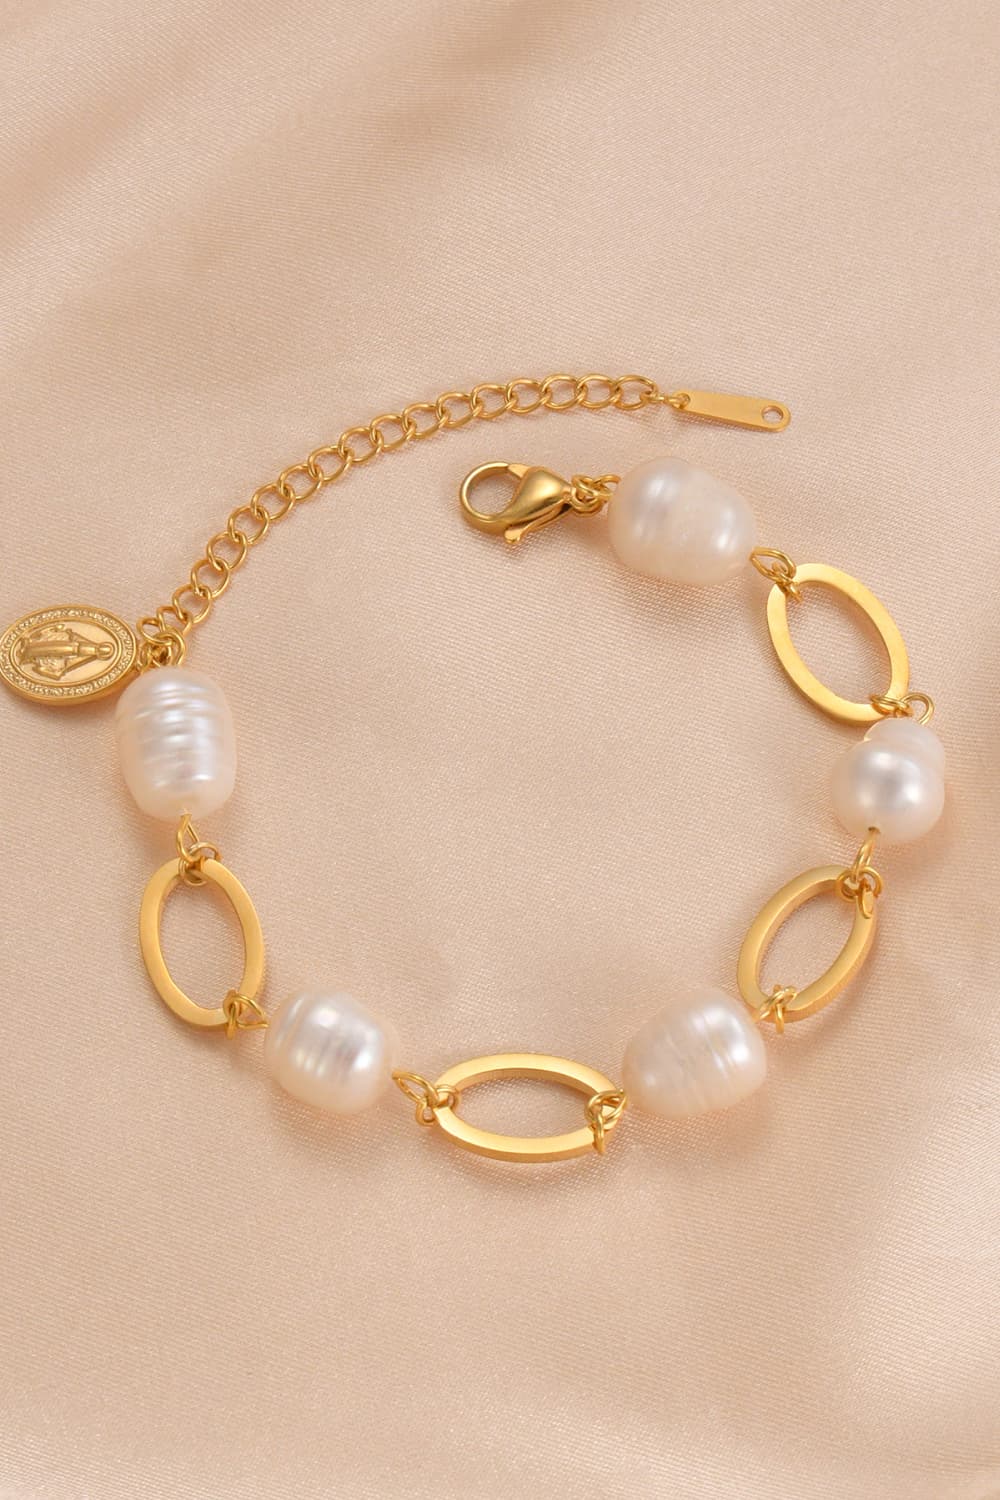 14K Gold-plated Lobster Closure Freshwater Pearl Bracelet - Gold / One Size - Women’s Jewelry - Bracelets - 2 - 2024